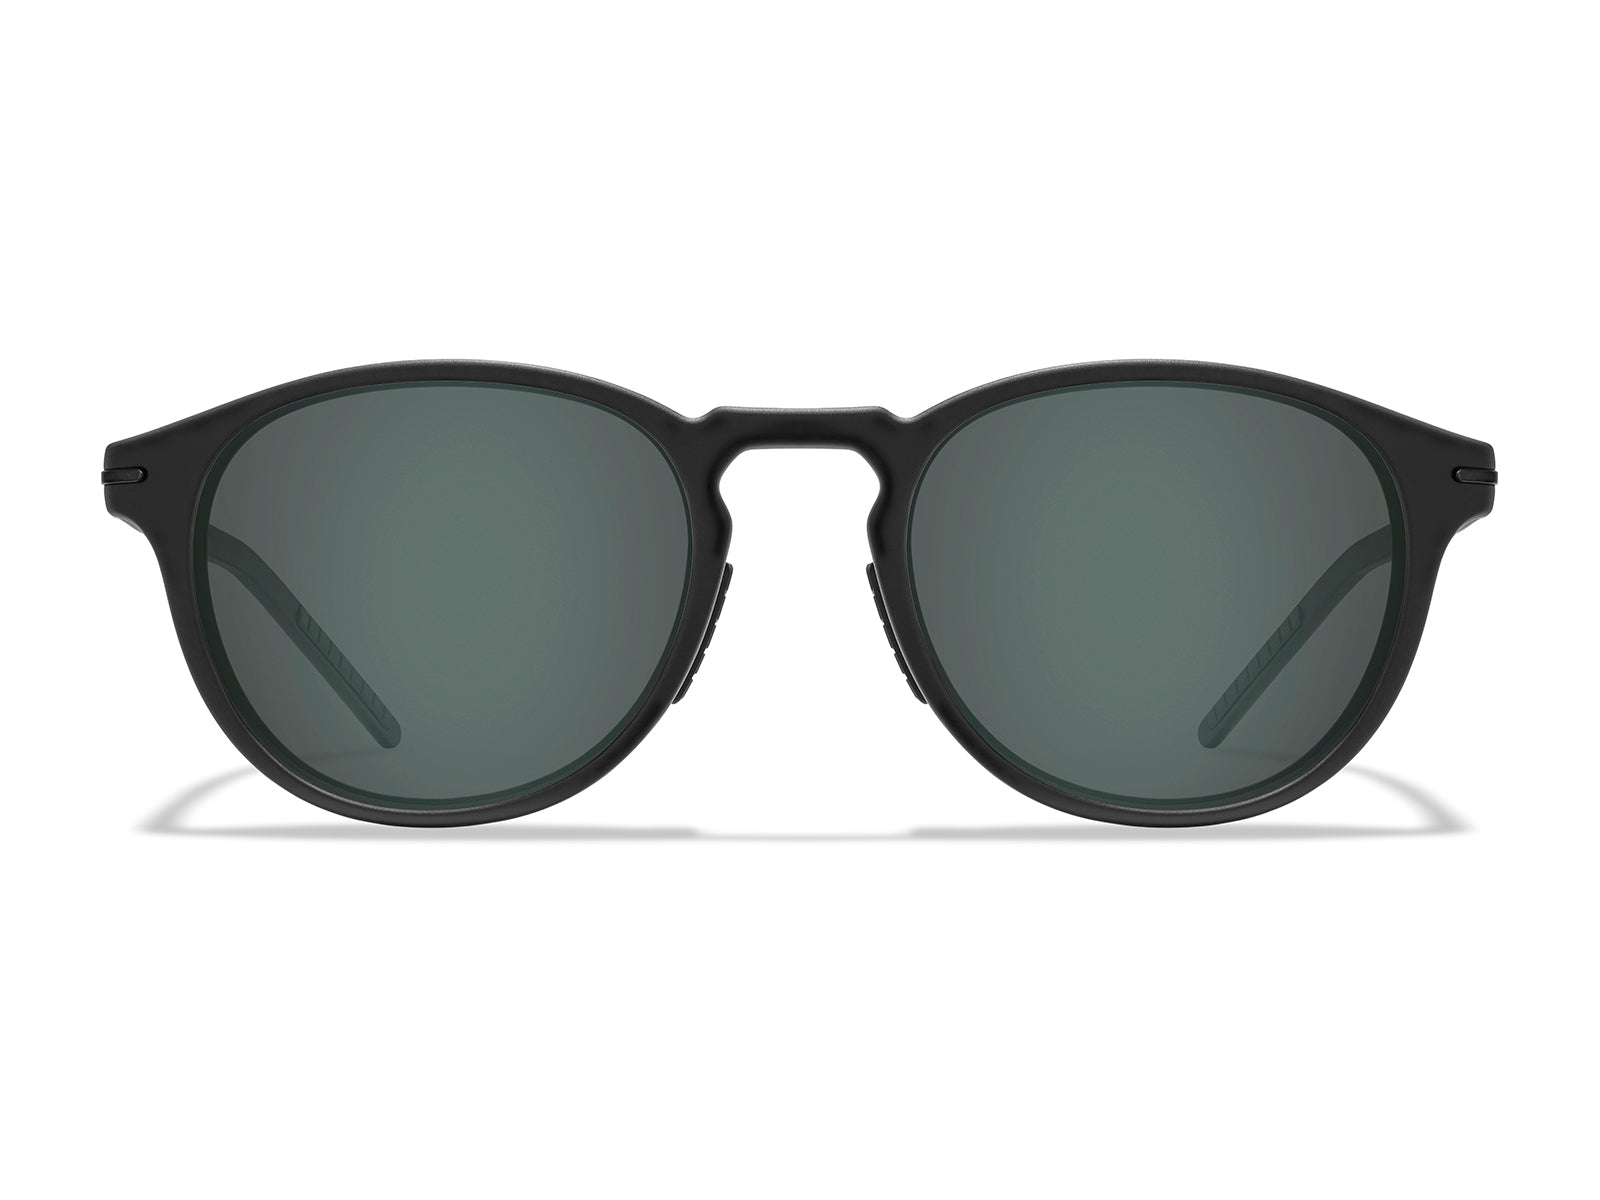 Ultralight Performance Sunglasses